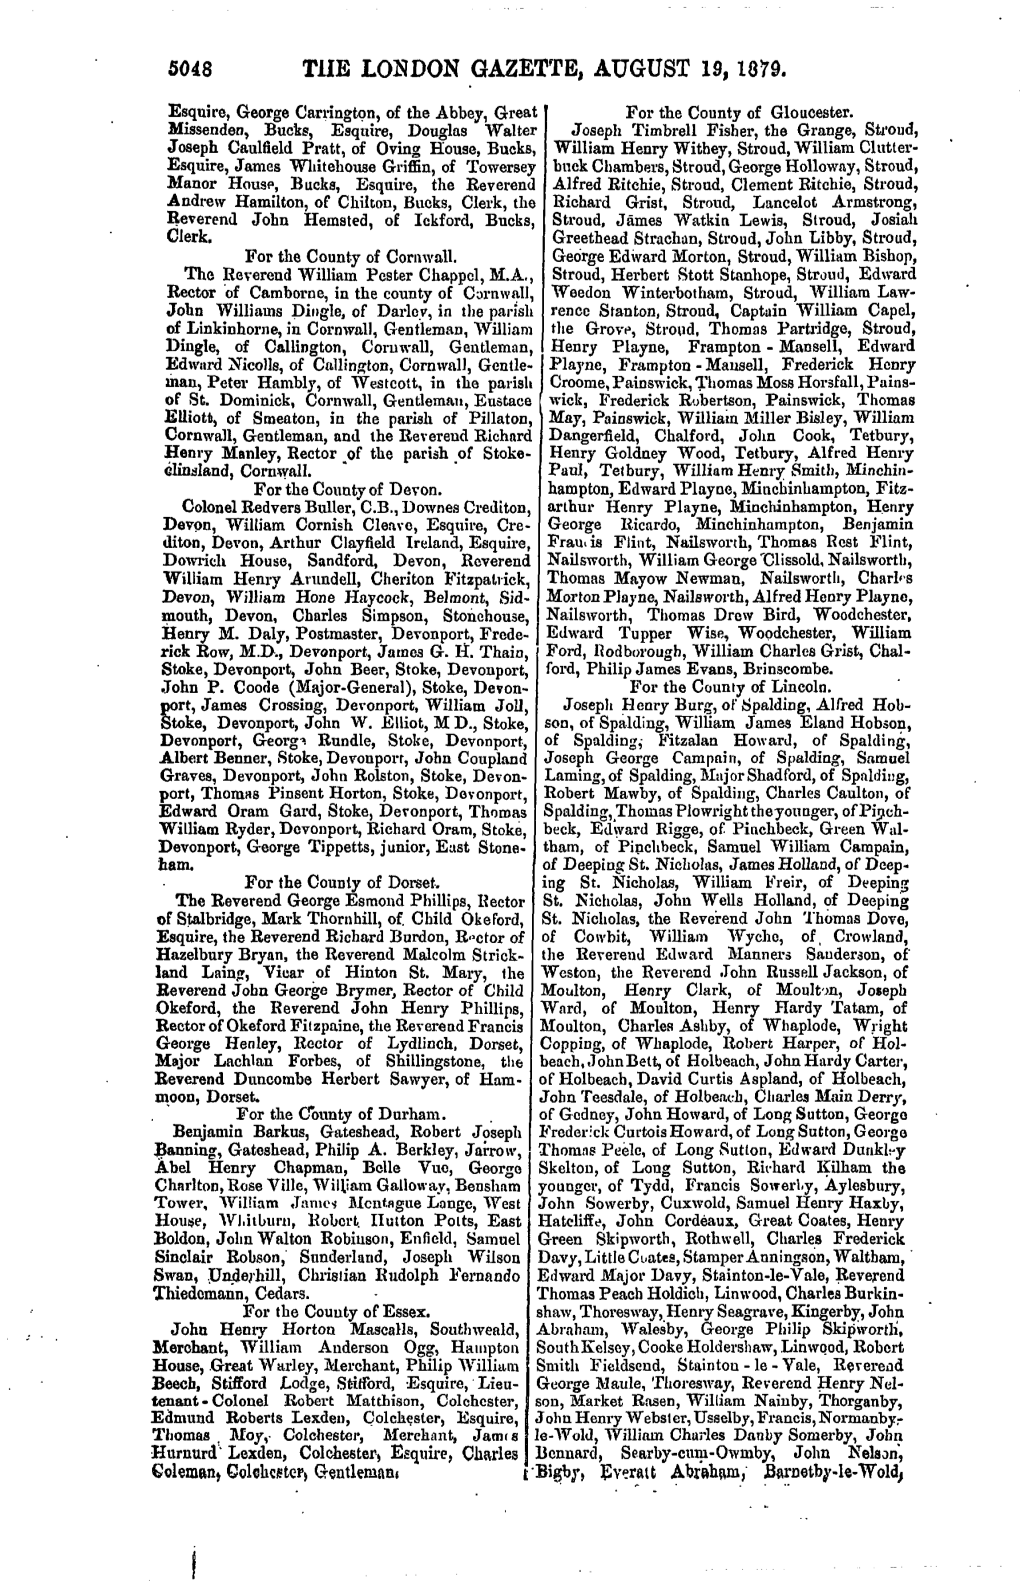 The London Gazette, August 19,1879